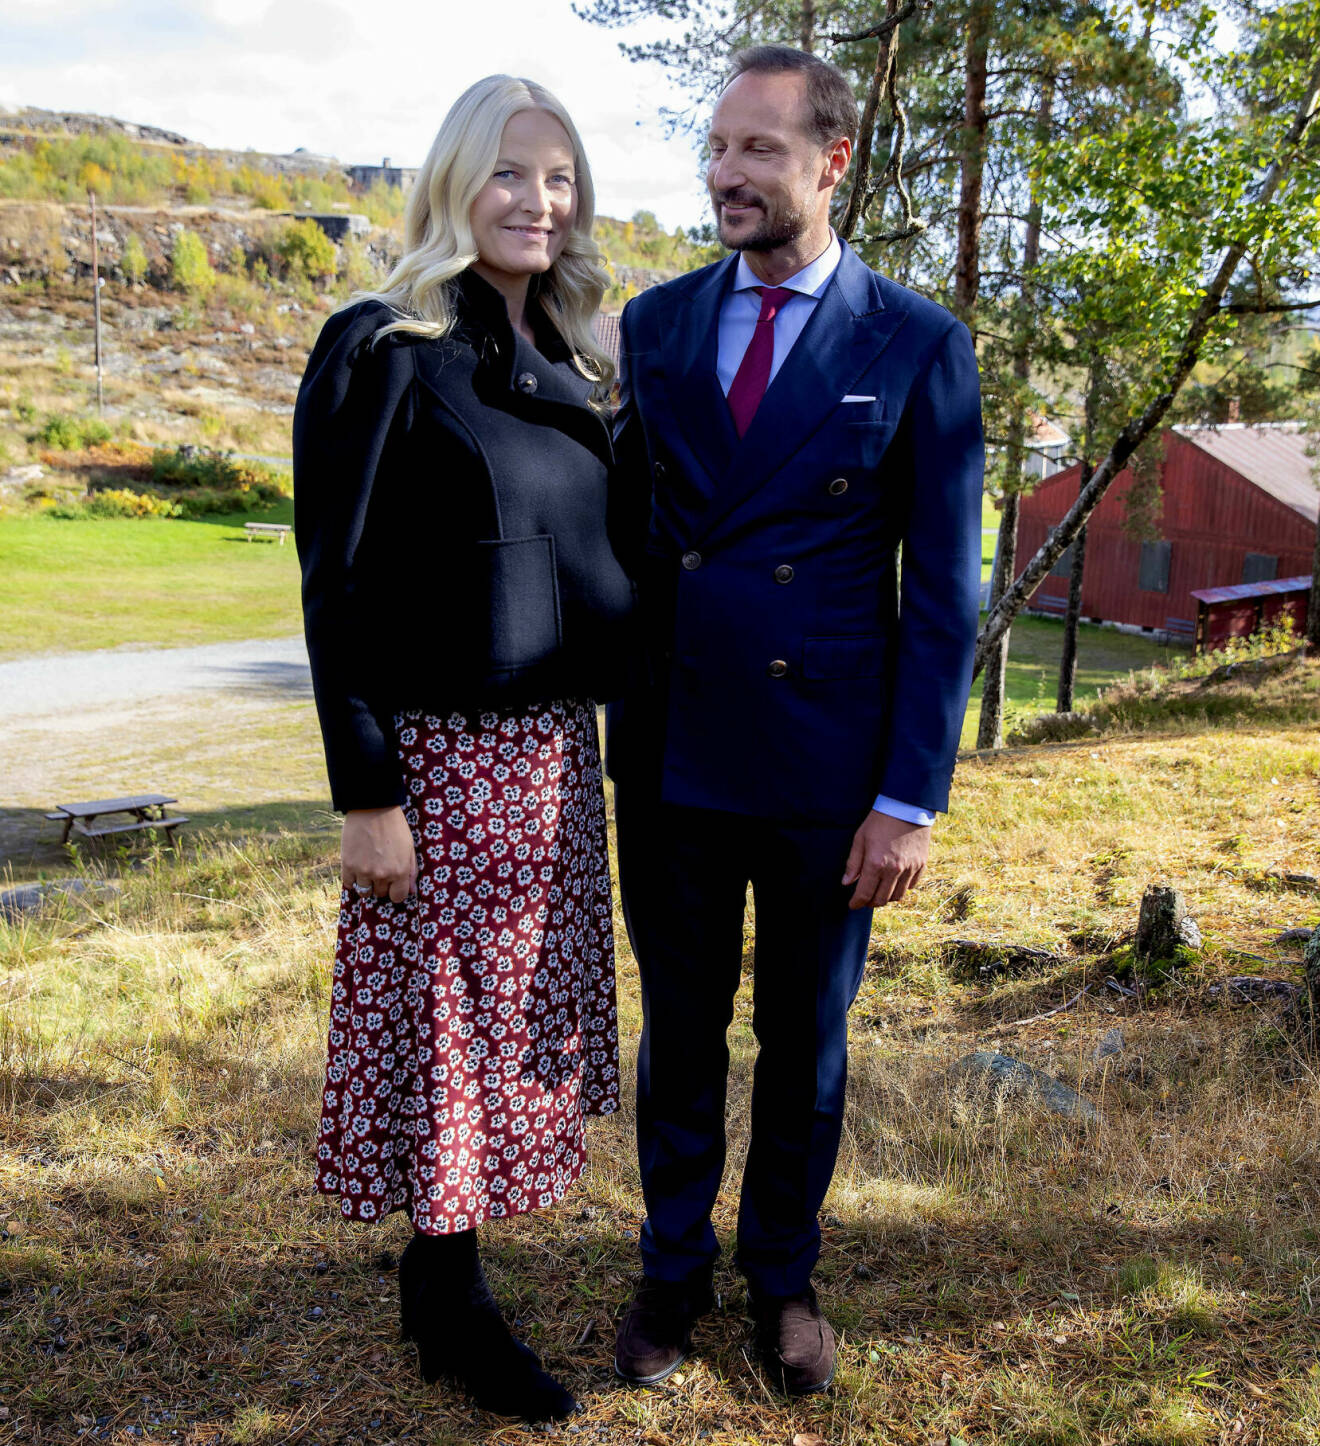 Kronprinsessan Mette-Marit Kronprins Haakon Fylkestur Østfold